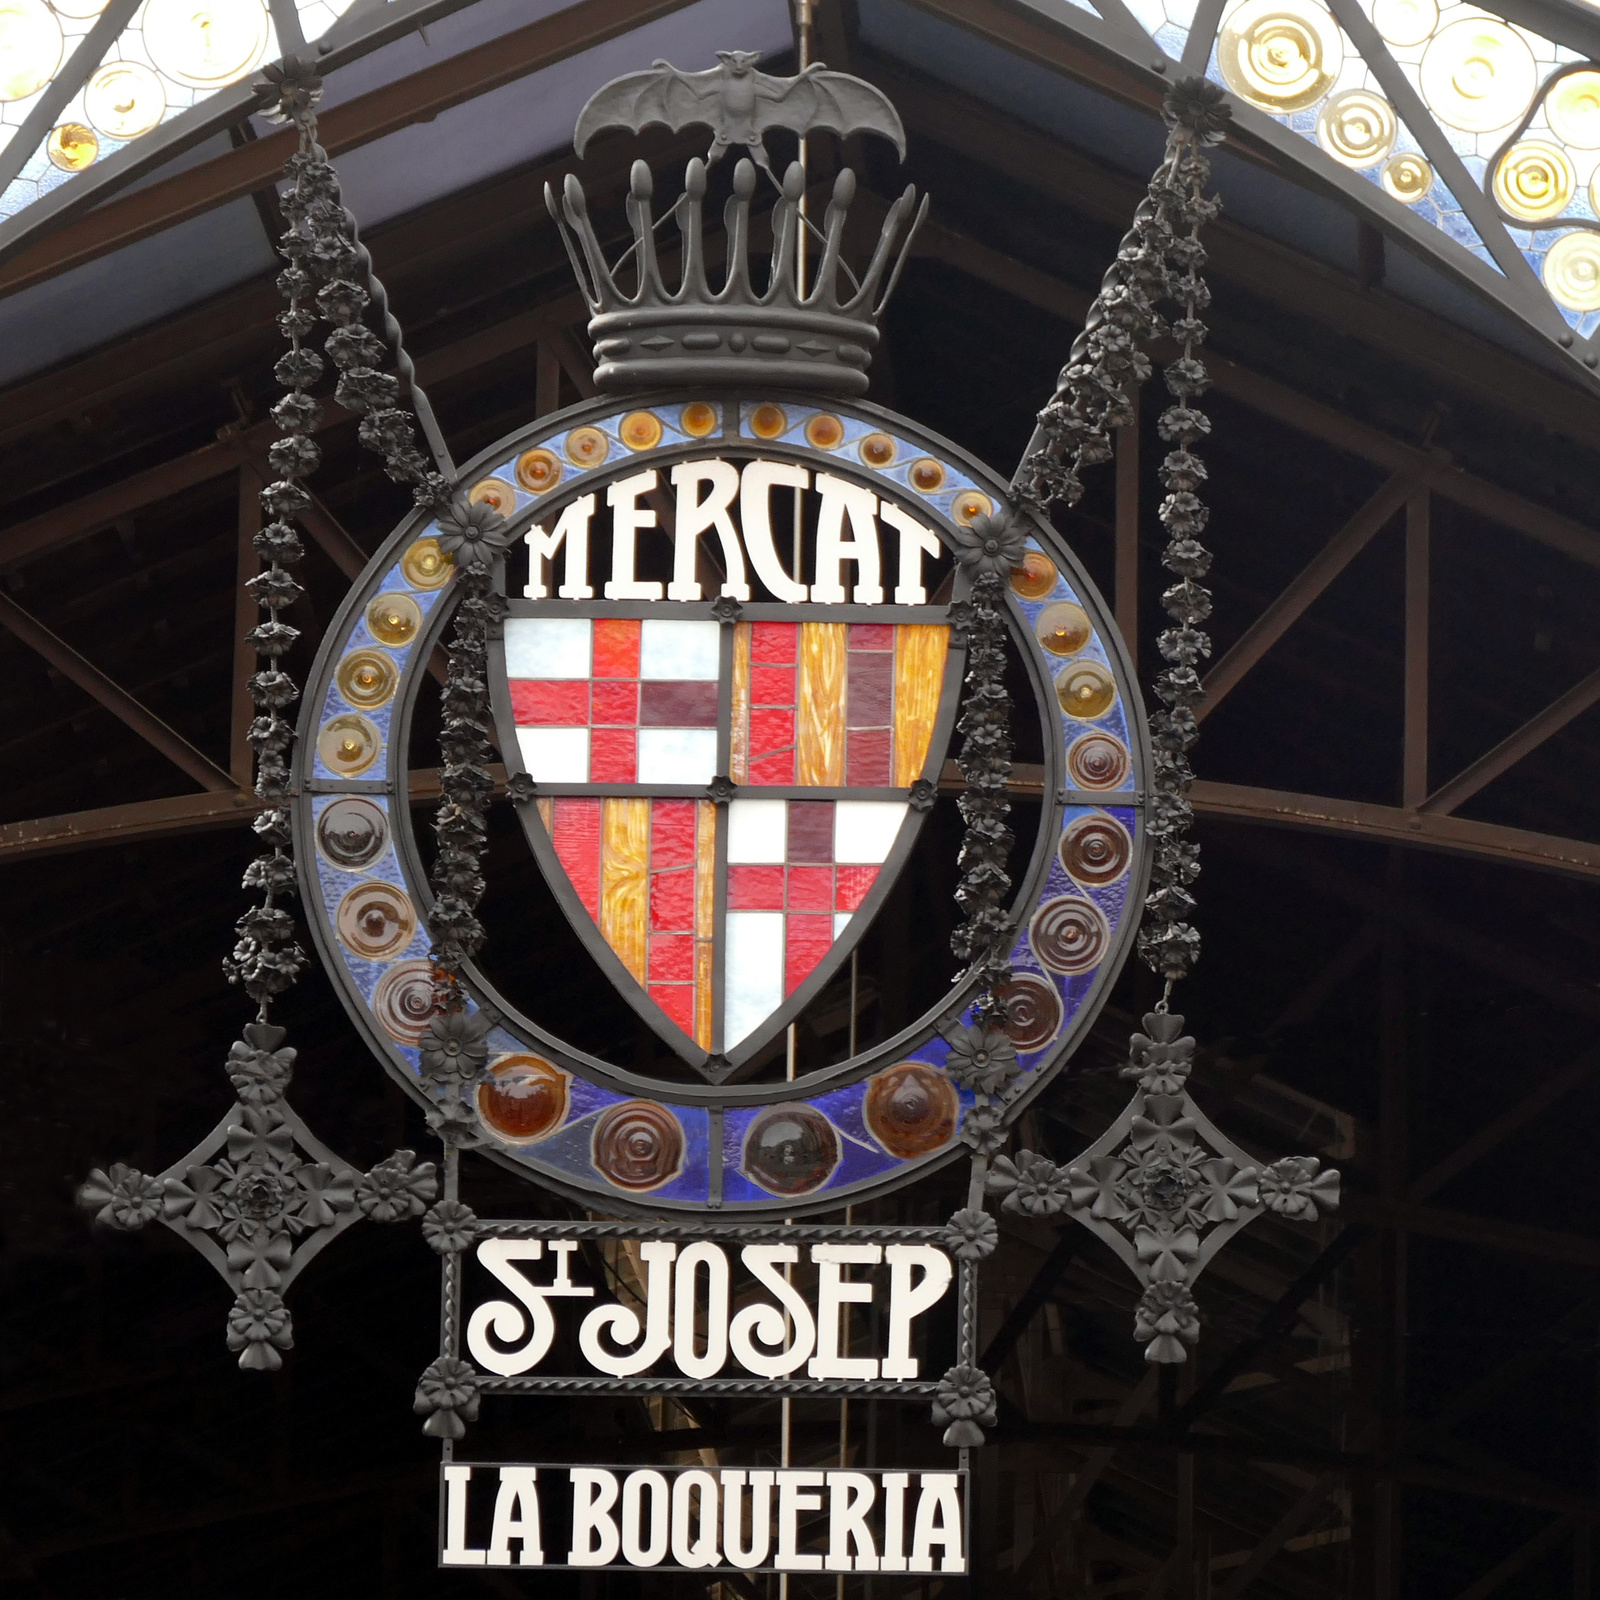 Costa - Barcelona La Boqueria európa egyik leghíresebb piacának 